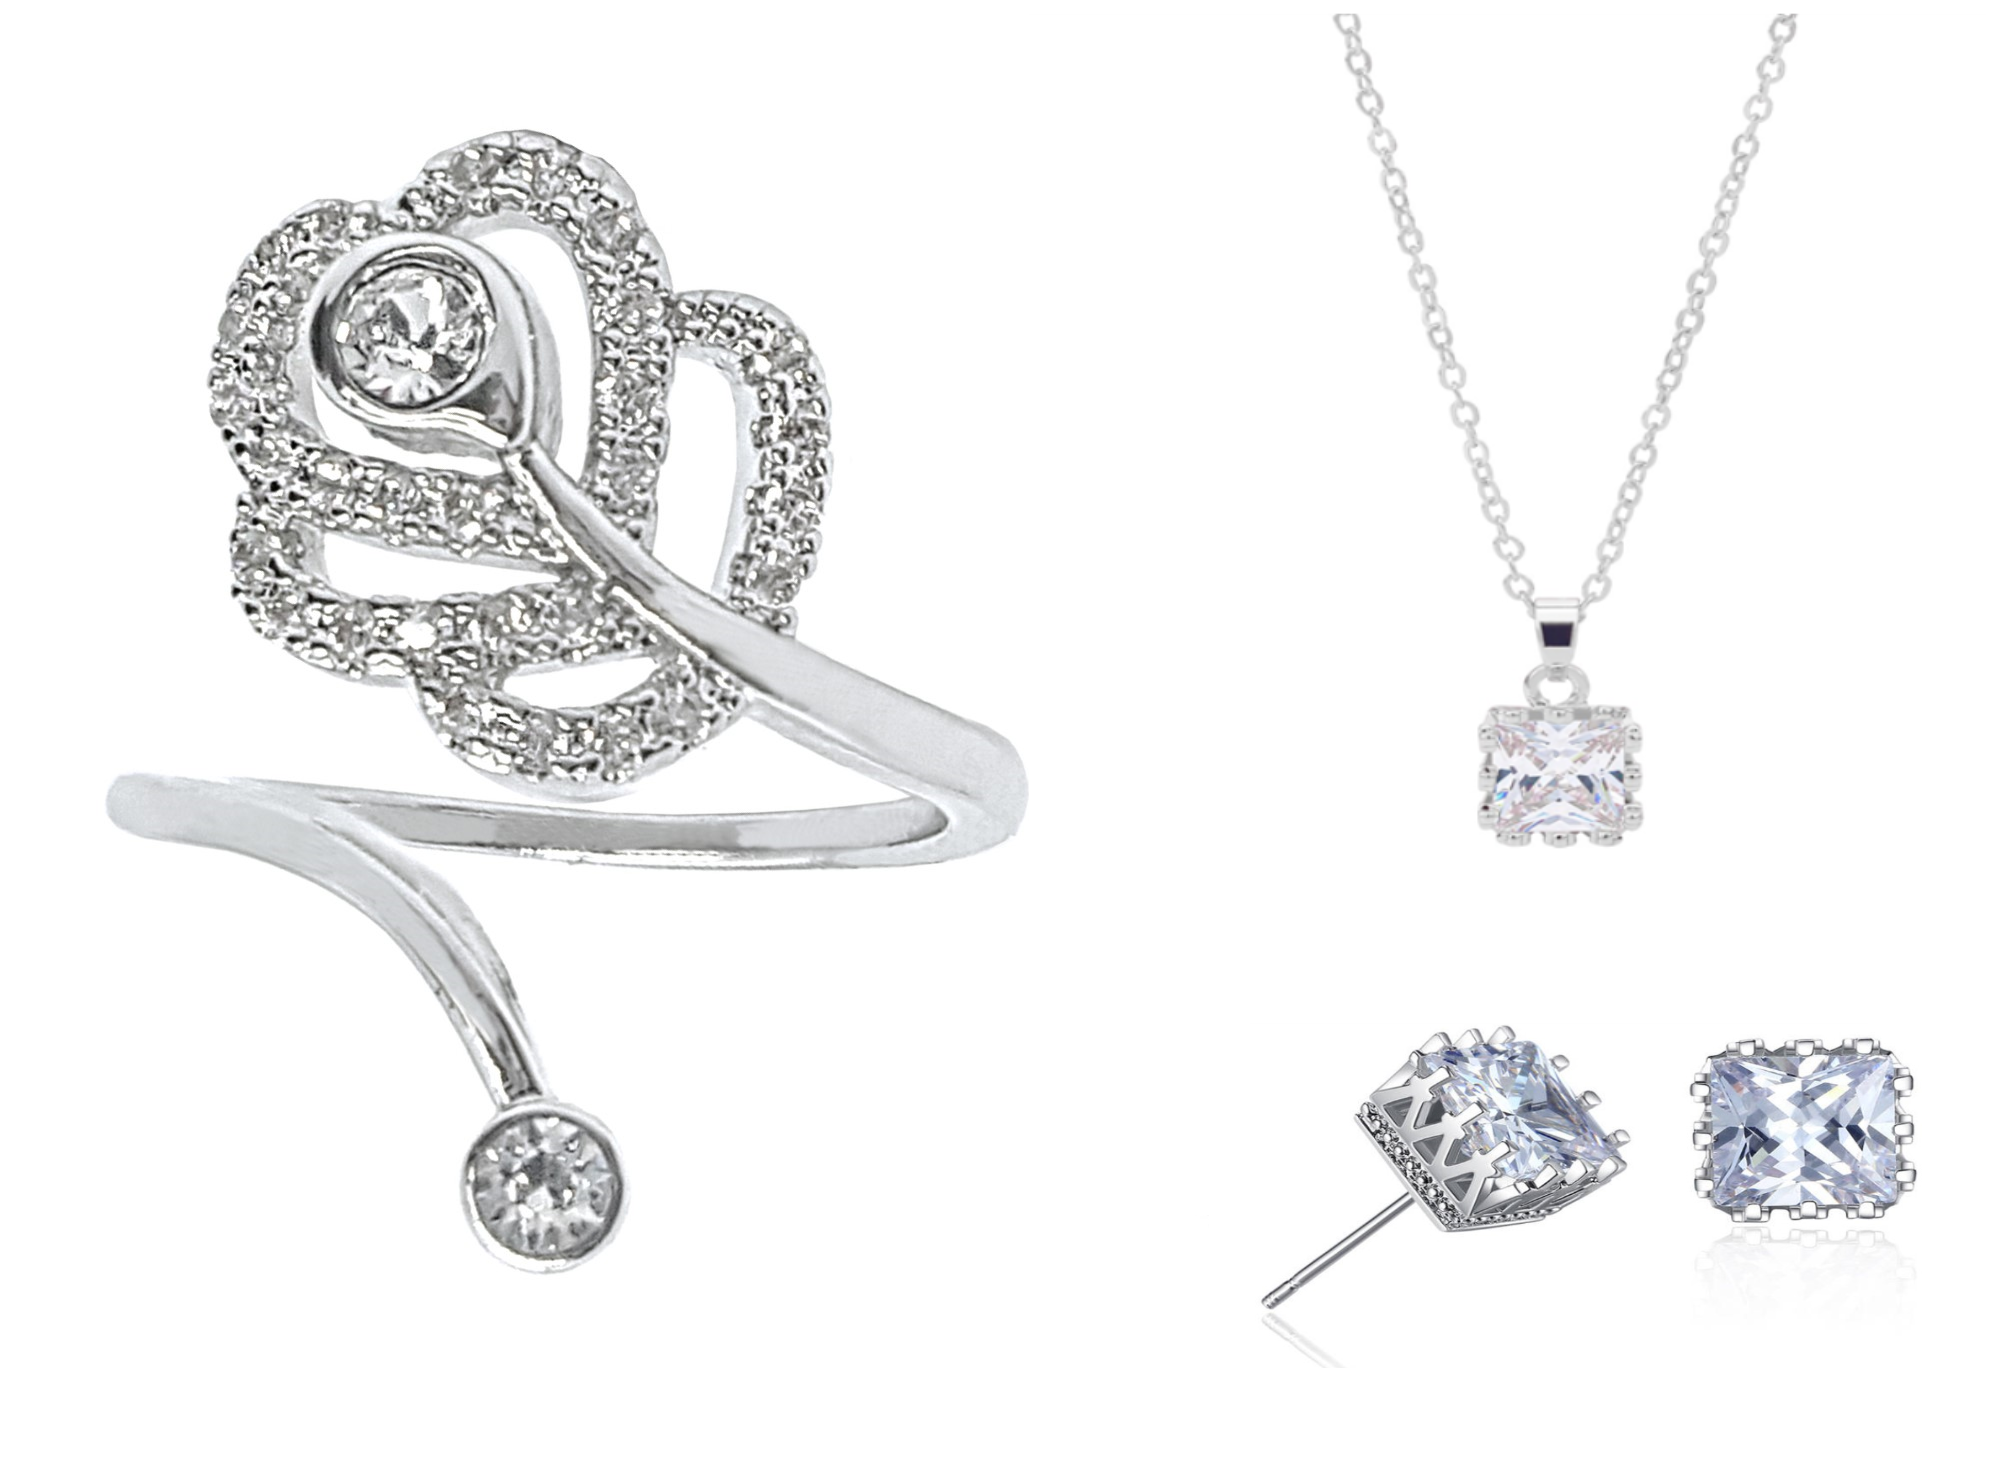 30 pcs - Silver Princess Cut Crystal Pendant Necklace Open Flower Ring and Crown Stud Earrings Tri-Set -10 Sets|GCJ087GCC046GCC104-Silver-Tri-Set|UK S